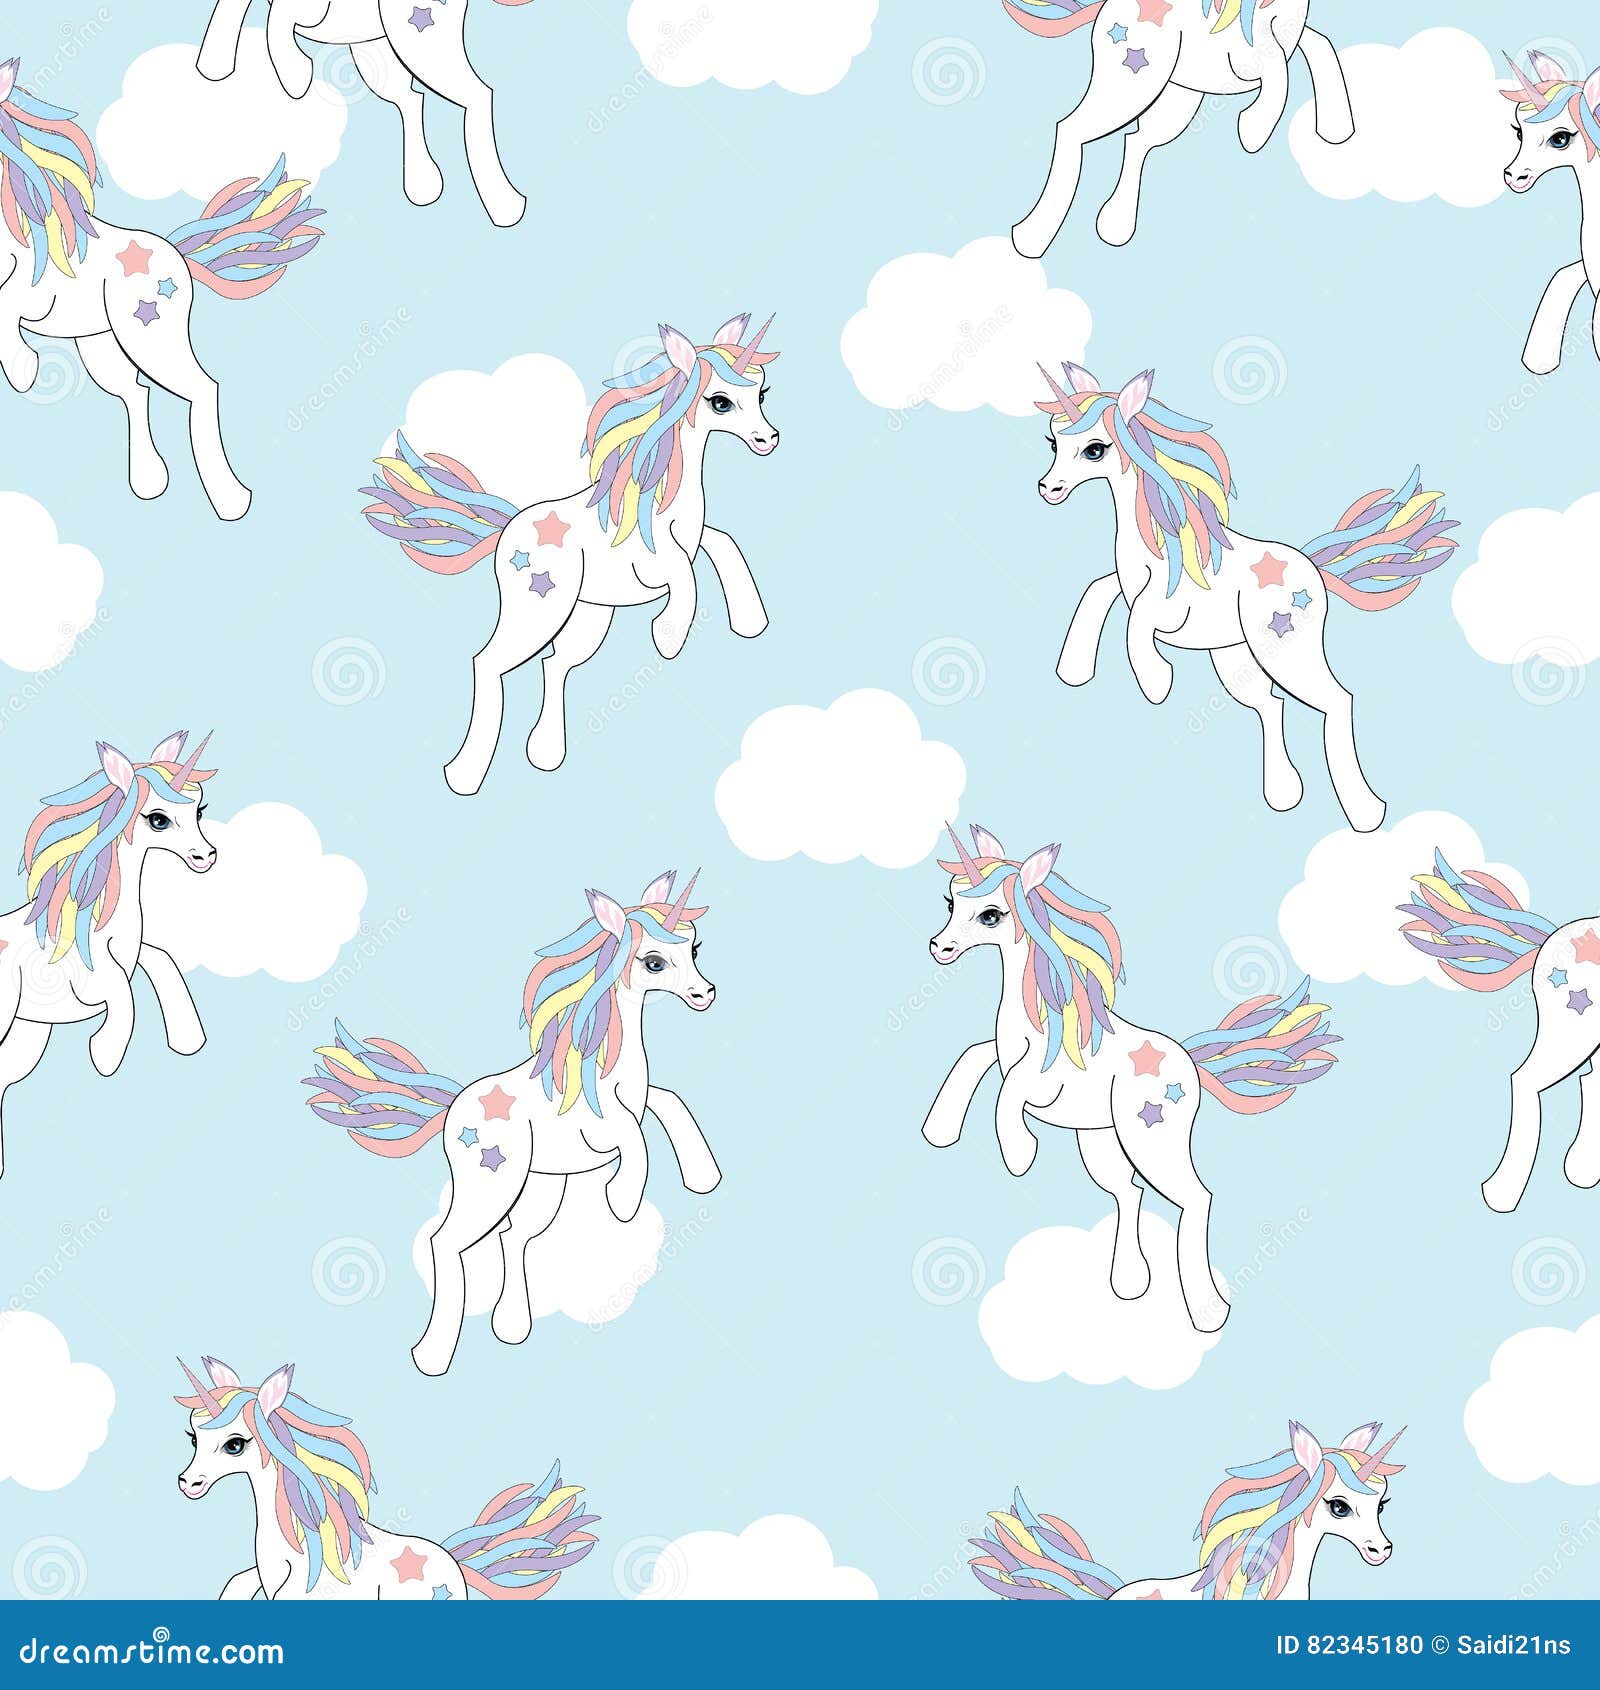 Seamless Background Of Animal Illustration With Cute Unicorn On